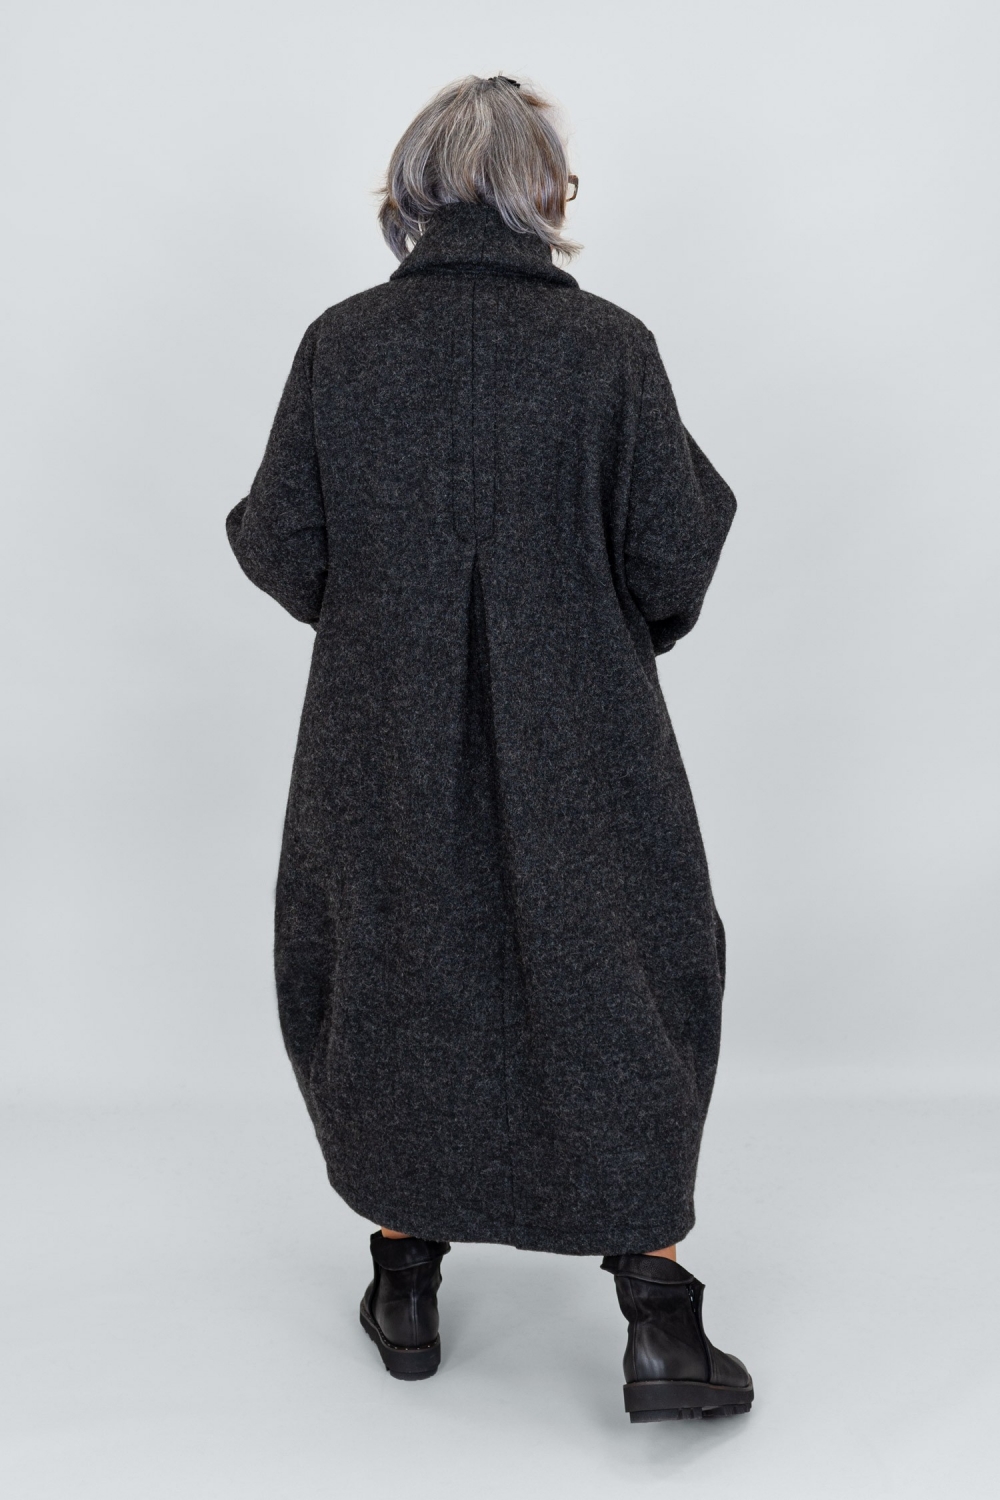 Sesara Mantel im Oversized Look aus 100% Wolle in anthrazit